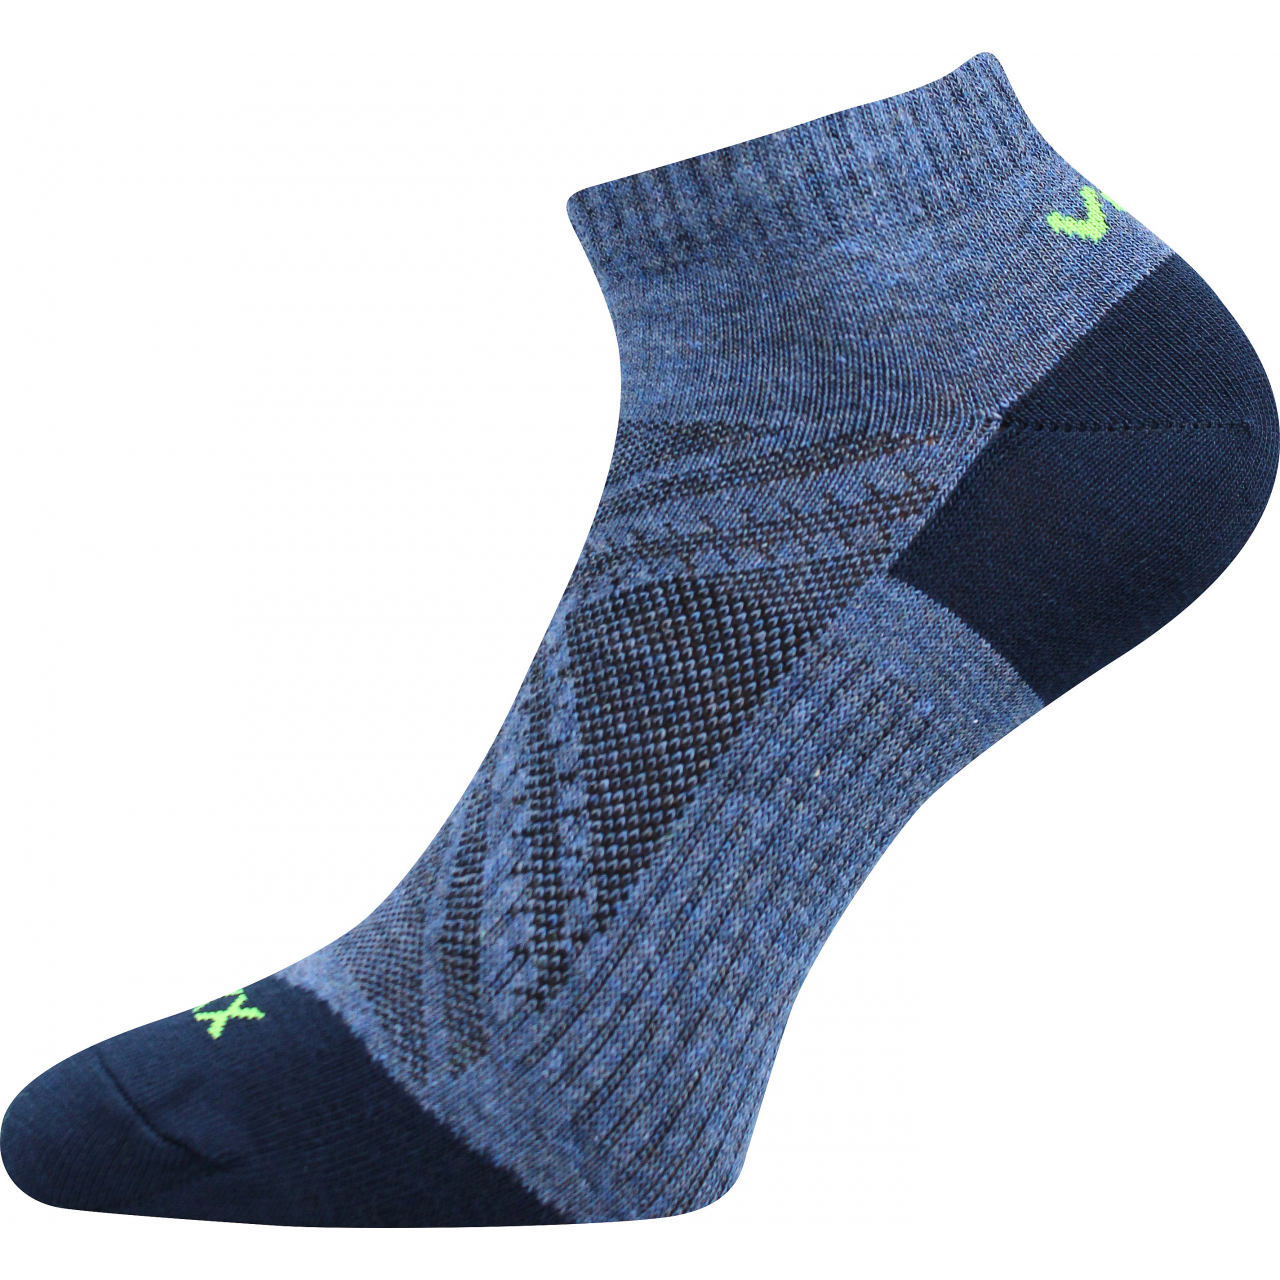 Ponožky slabé unisex Voxx Rex 15 - modré, 35-38